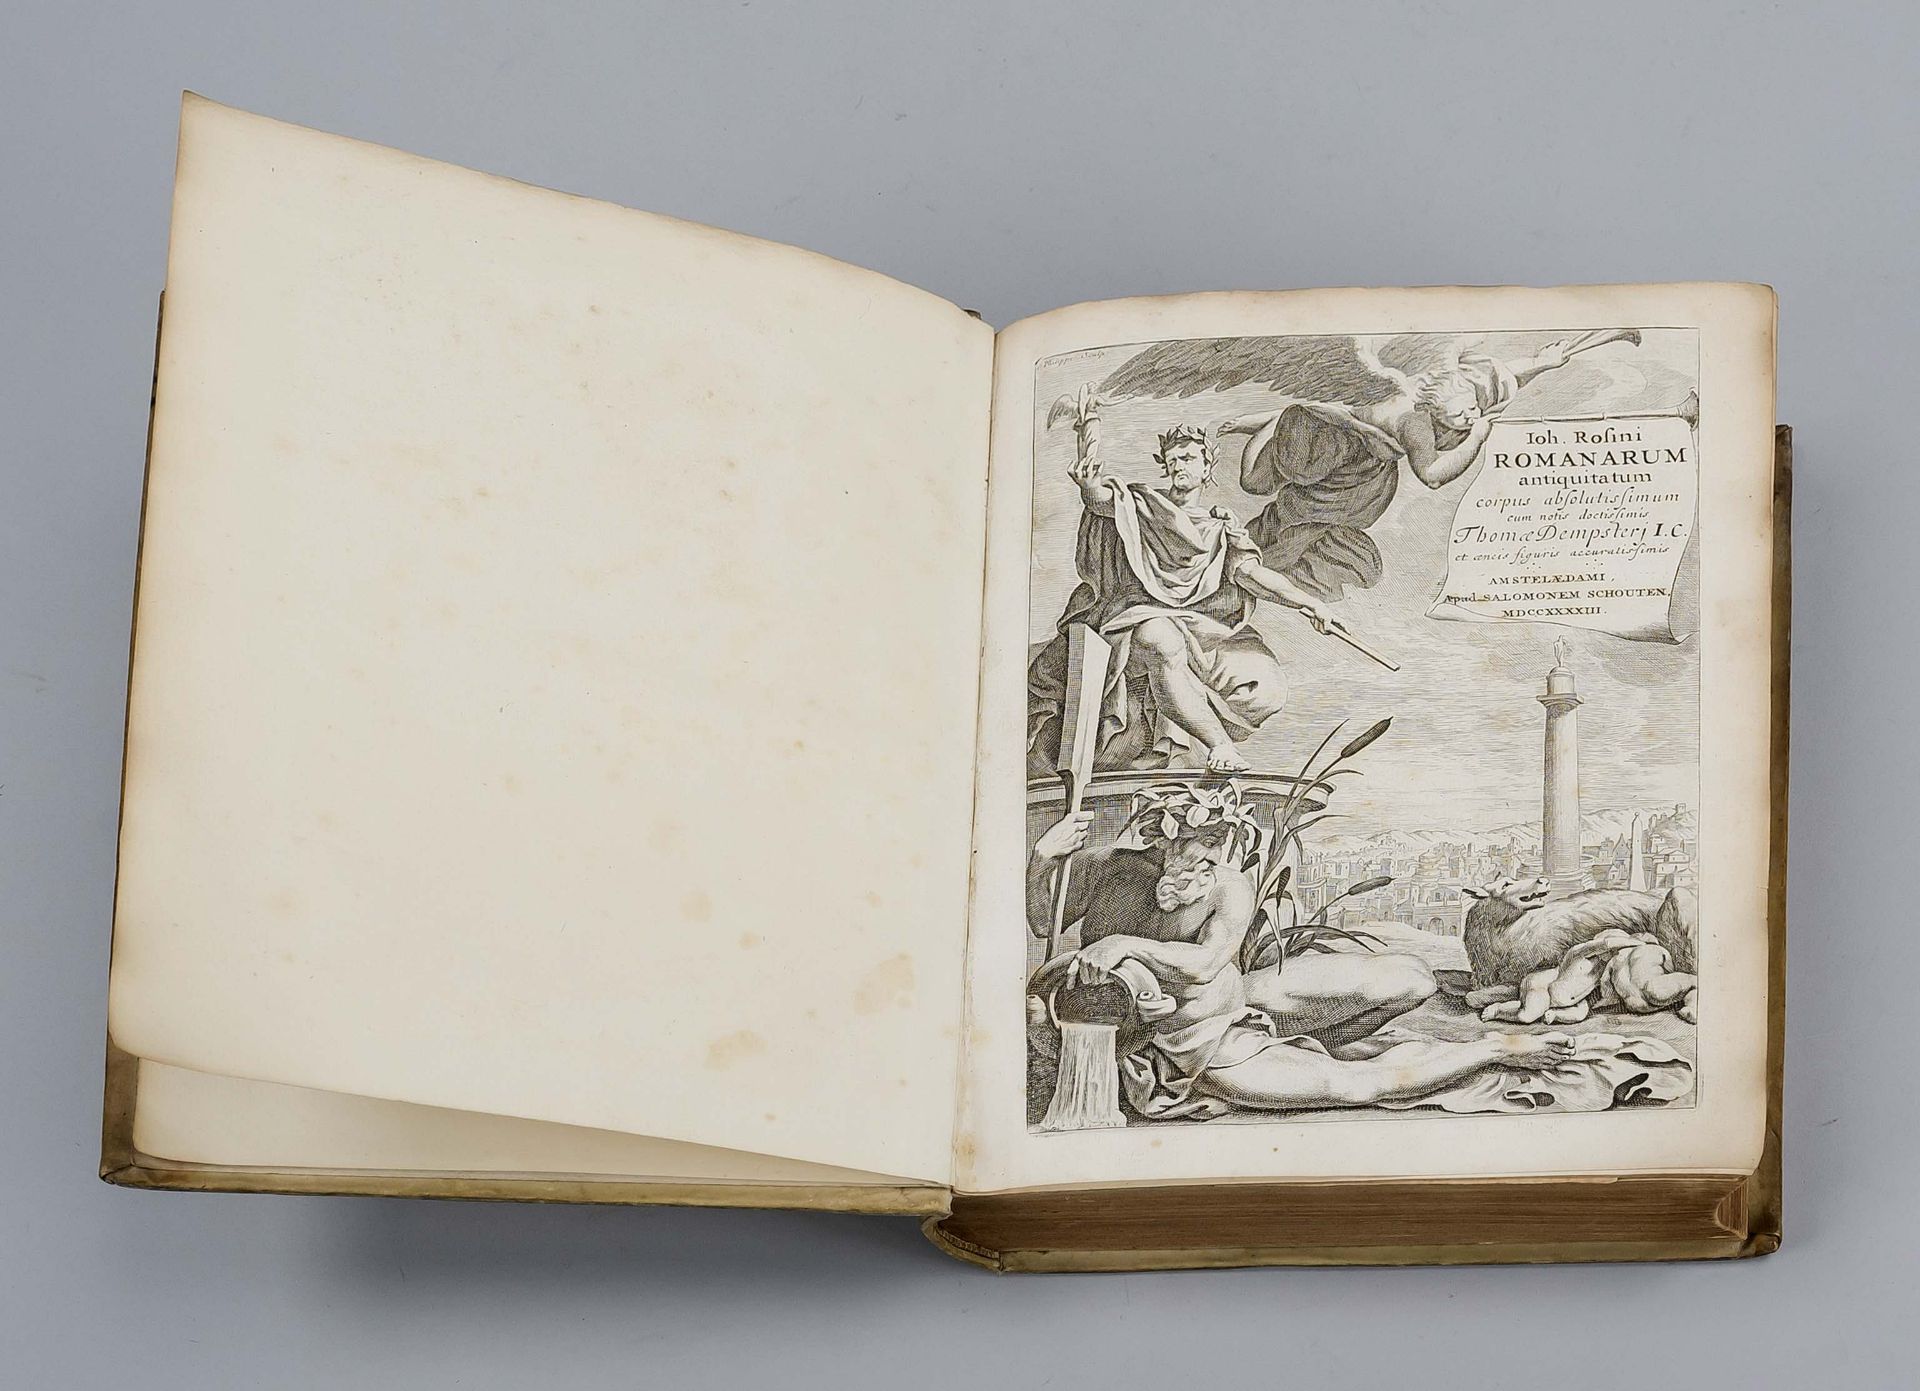 Book ''Antiquitatum Romanorum'' by Johannis Rosini, edition by Salomonem Schouten, 1743, with